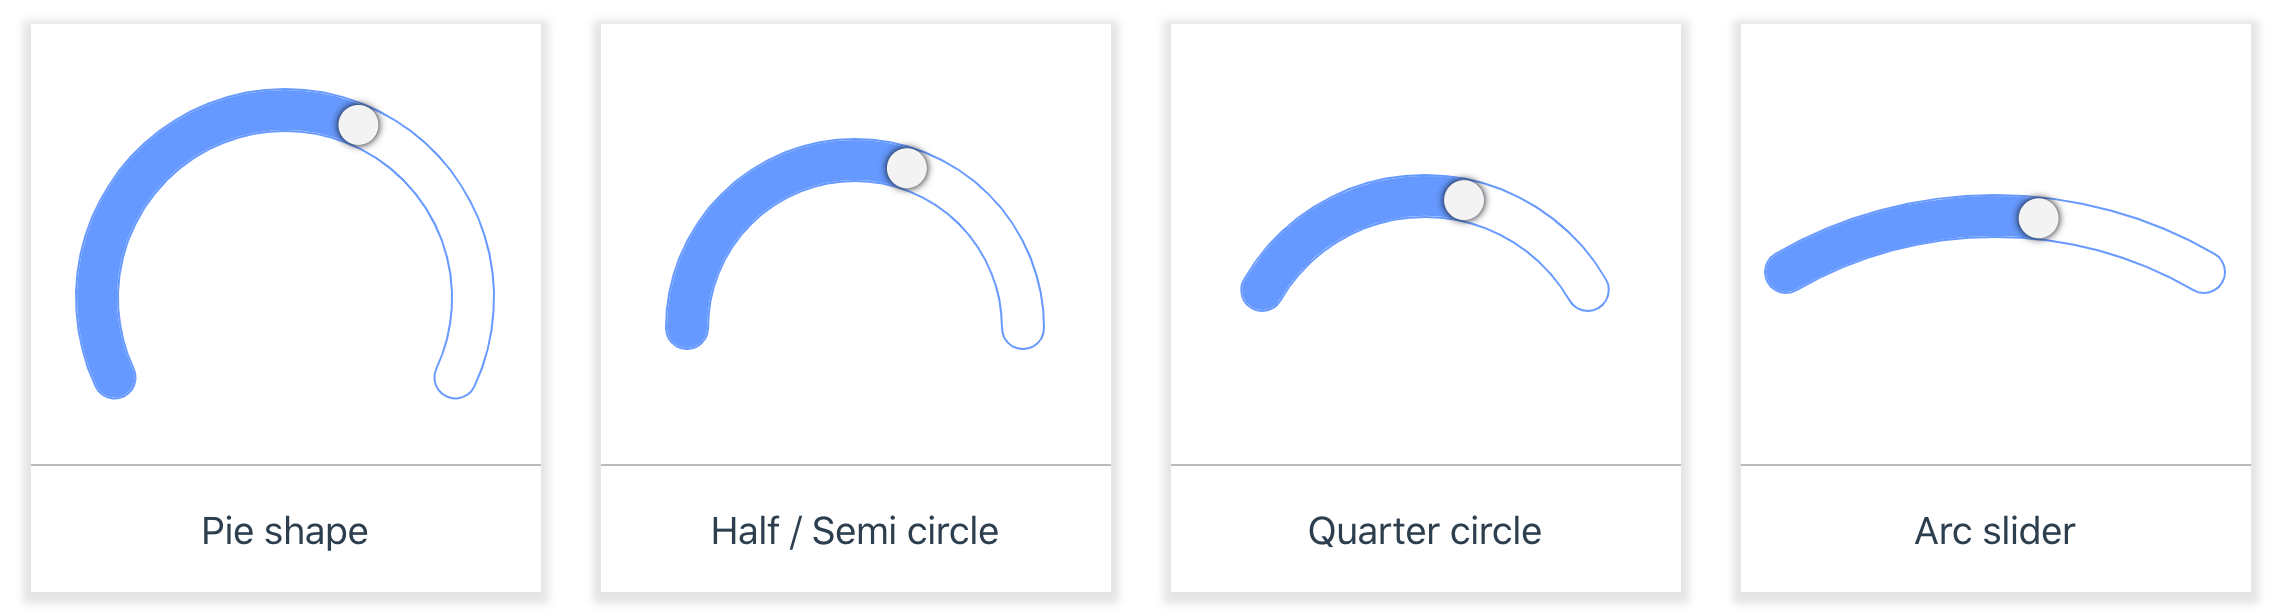 vue-round-slider - different circle shapes - pie shape, half or semi-circle, quarter and arc slider